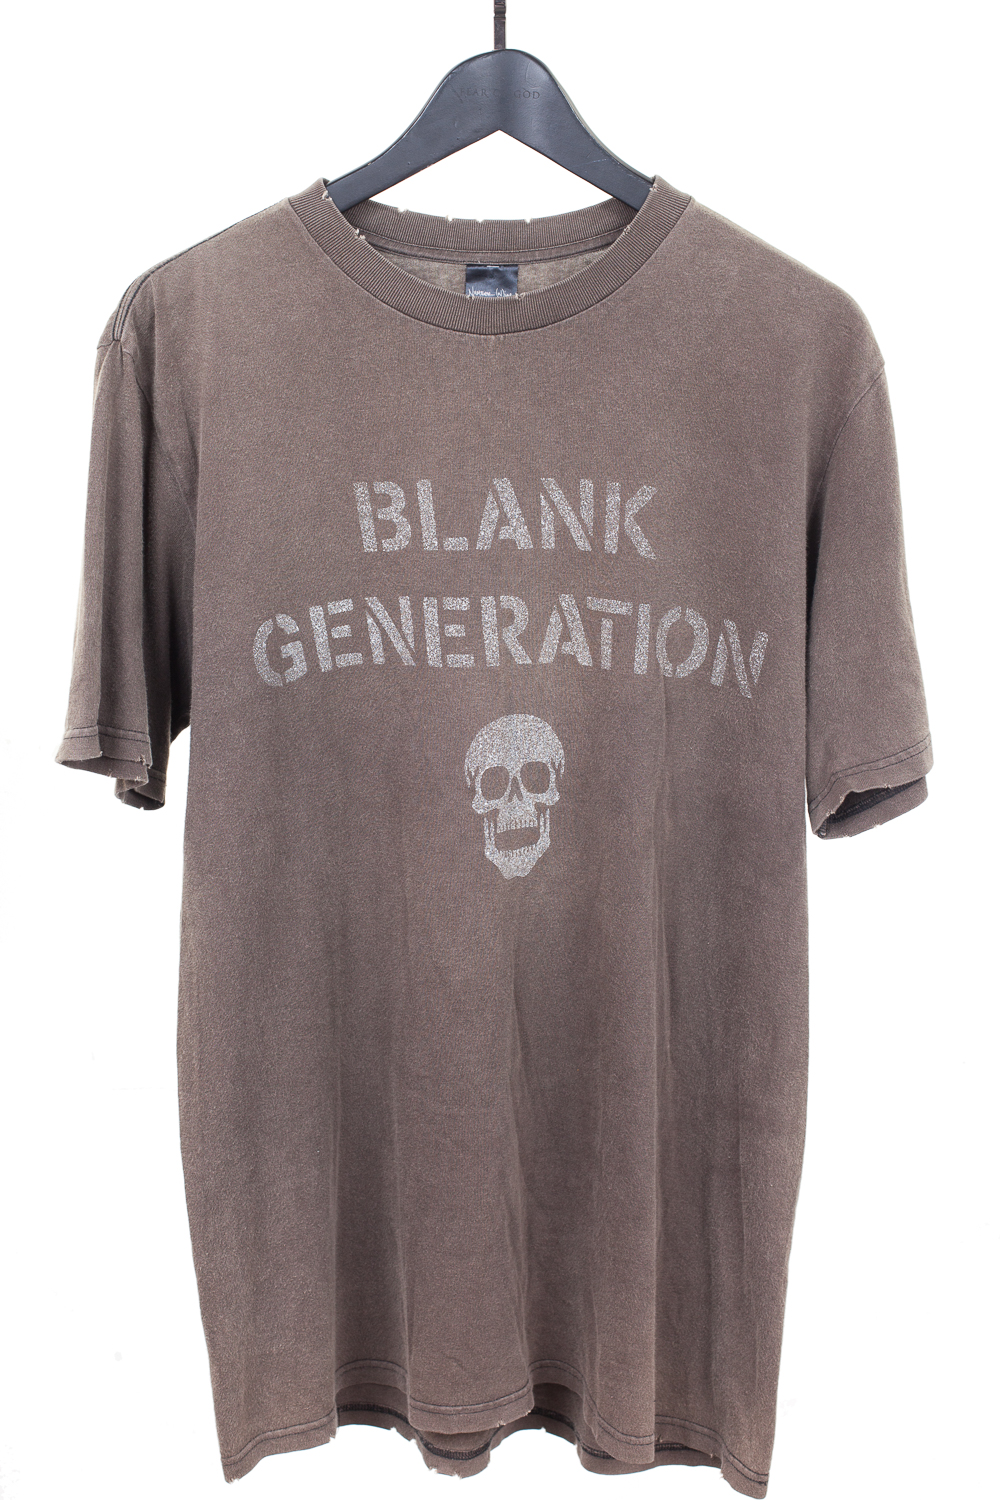 AW04 “Blank Generation” Richard Hell Tee